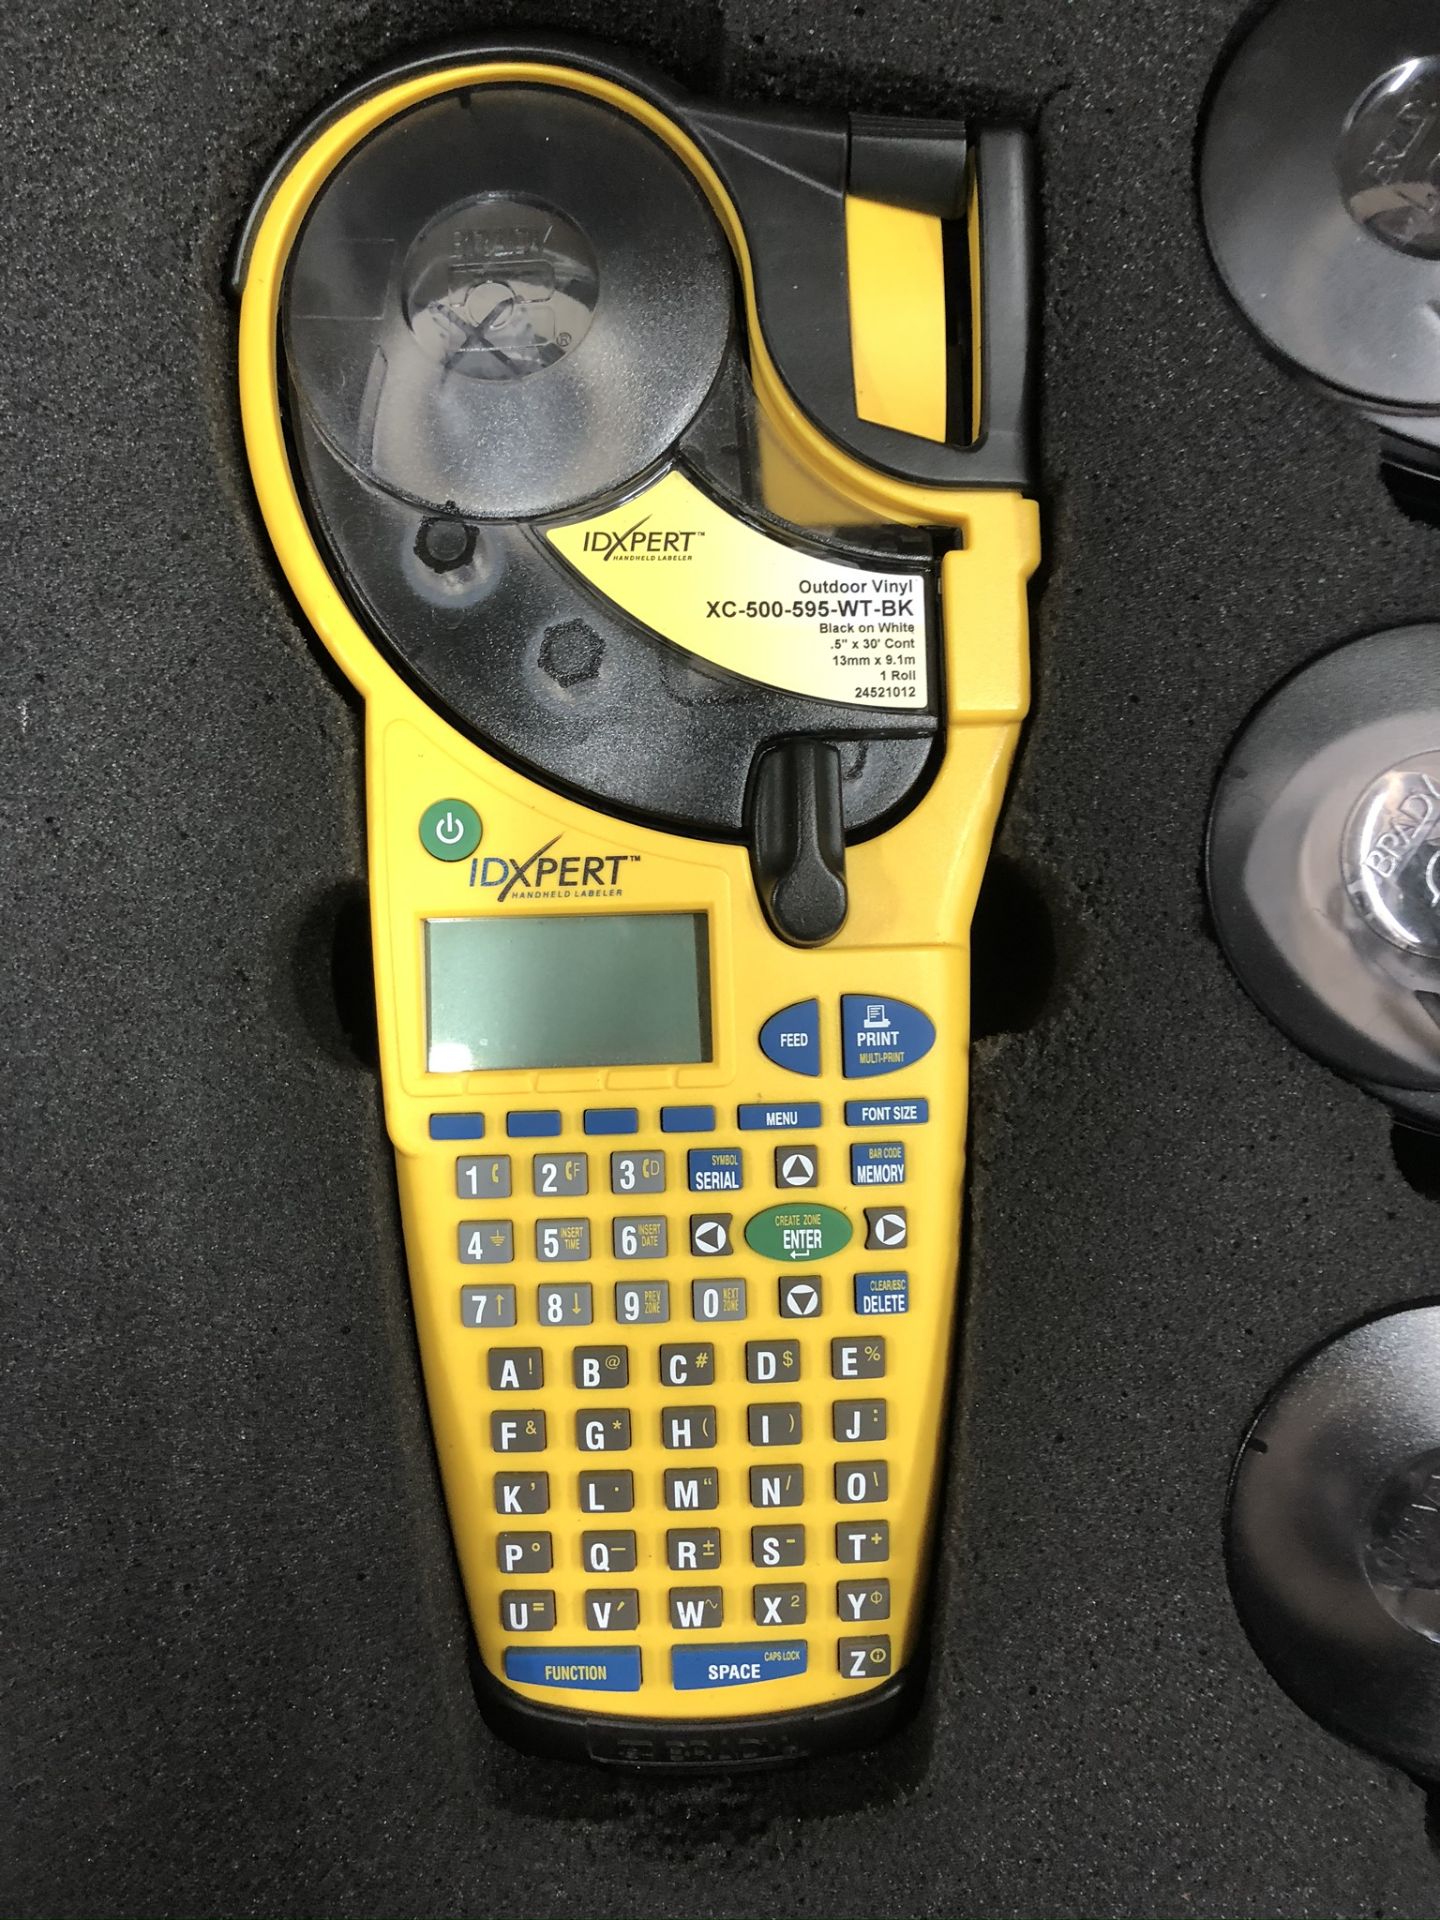 Idxpert XC-500-595-WT-BK Handheld Labeller - Image 3 of 4